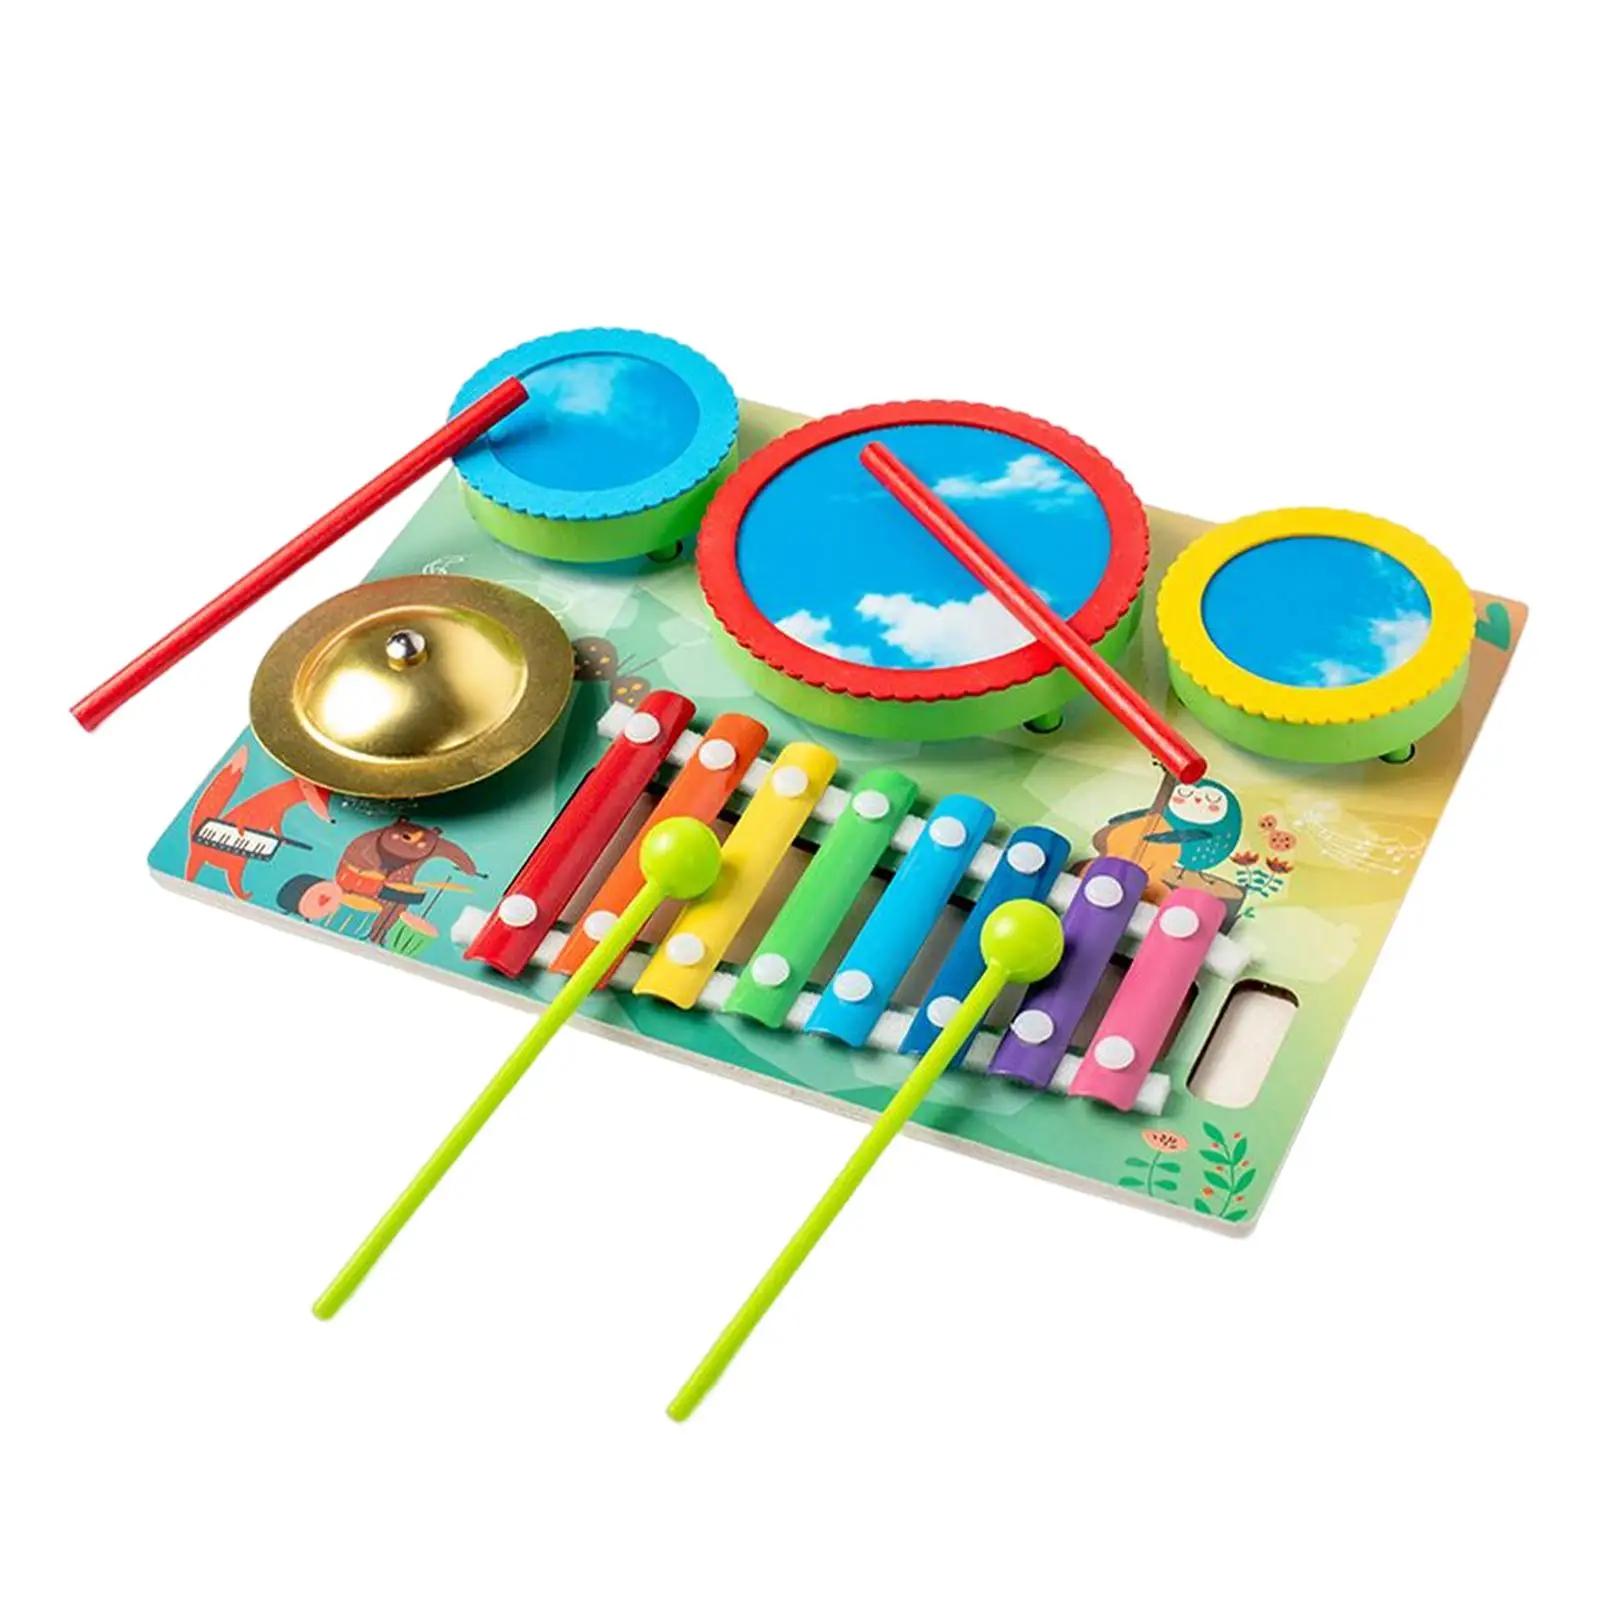 Kids Music Glockenspiel Percussion Musical Instruments for Children Boy Girl